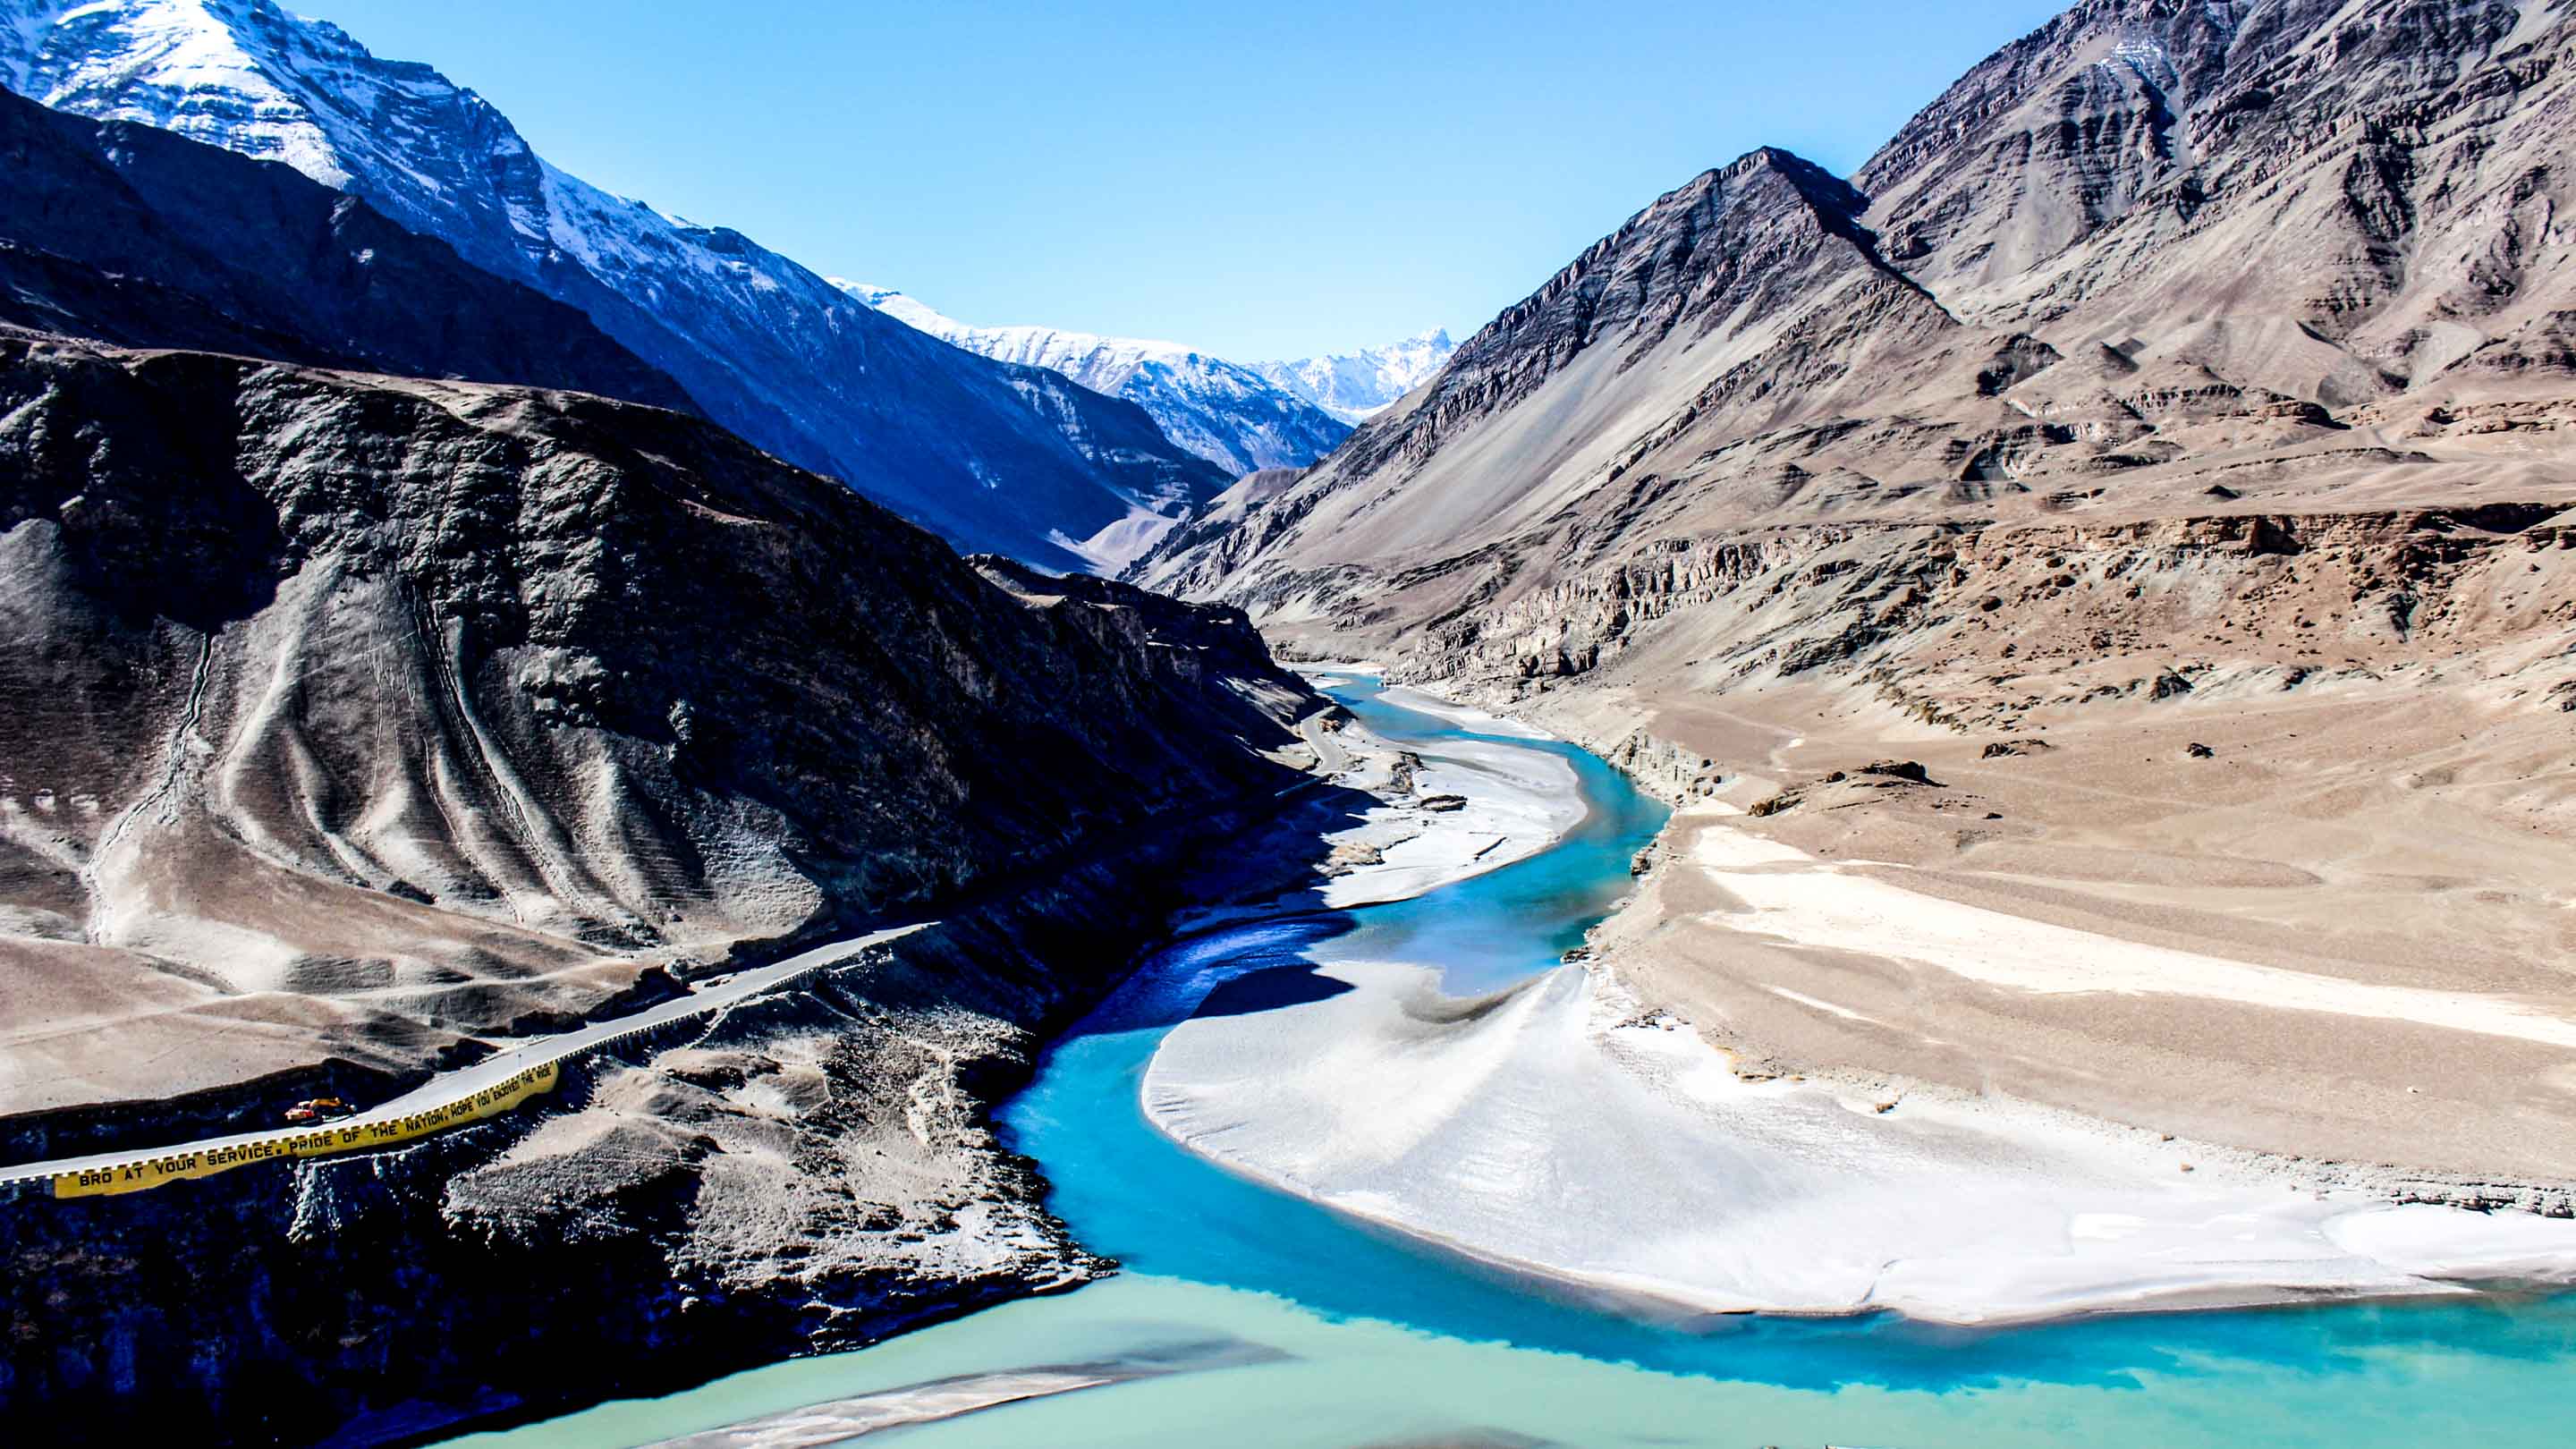 Какие реки берут начало в гималаях. Долина Занскар, Ладакх. Пакистан река инд. Долина реки инд Пакистан. Река инд в Индии.